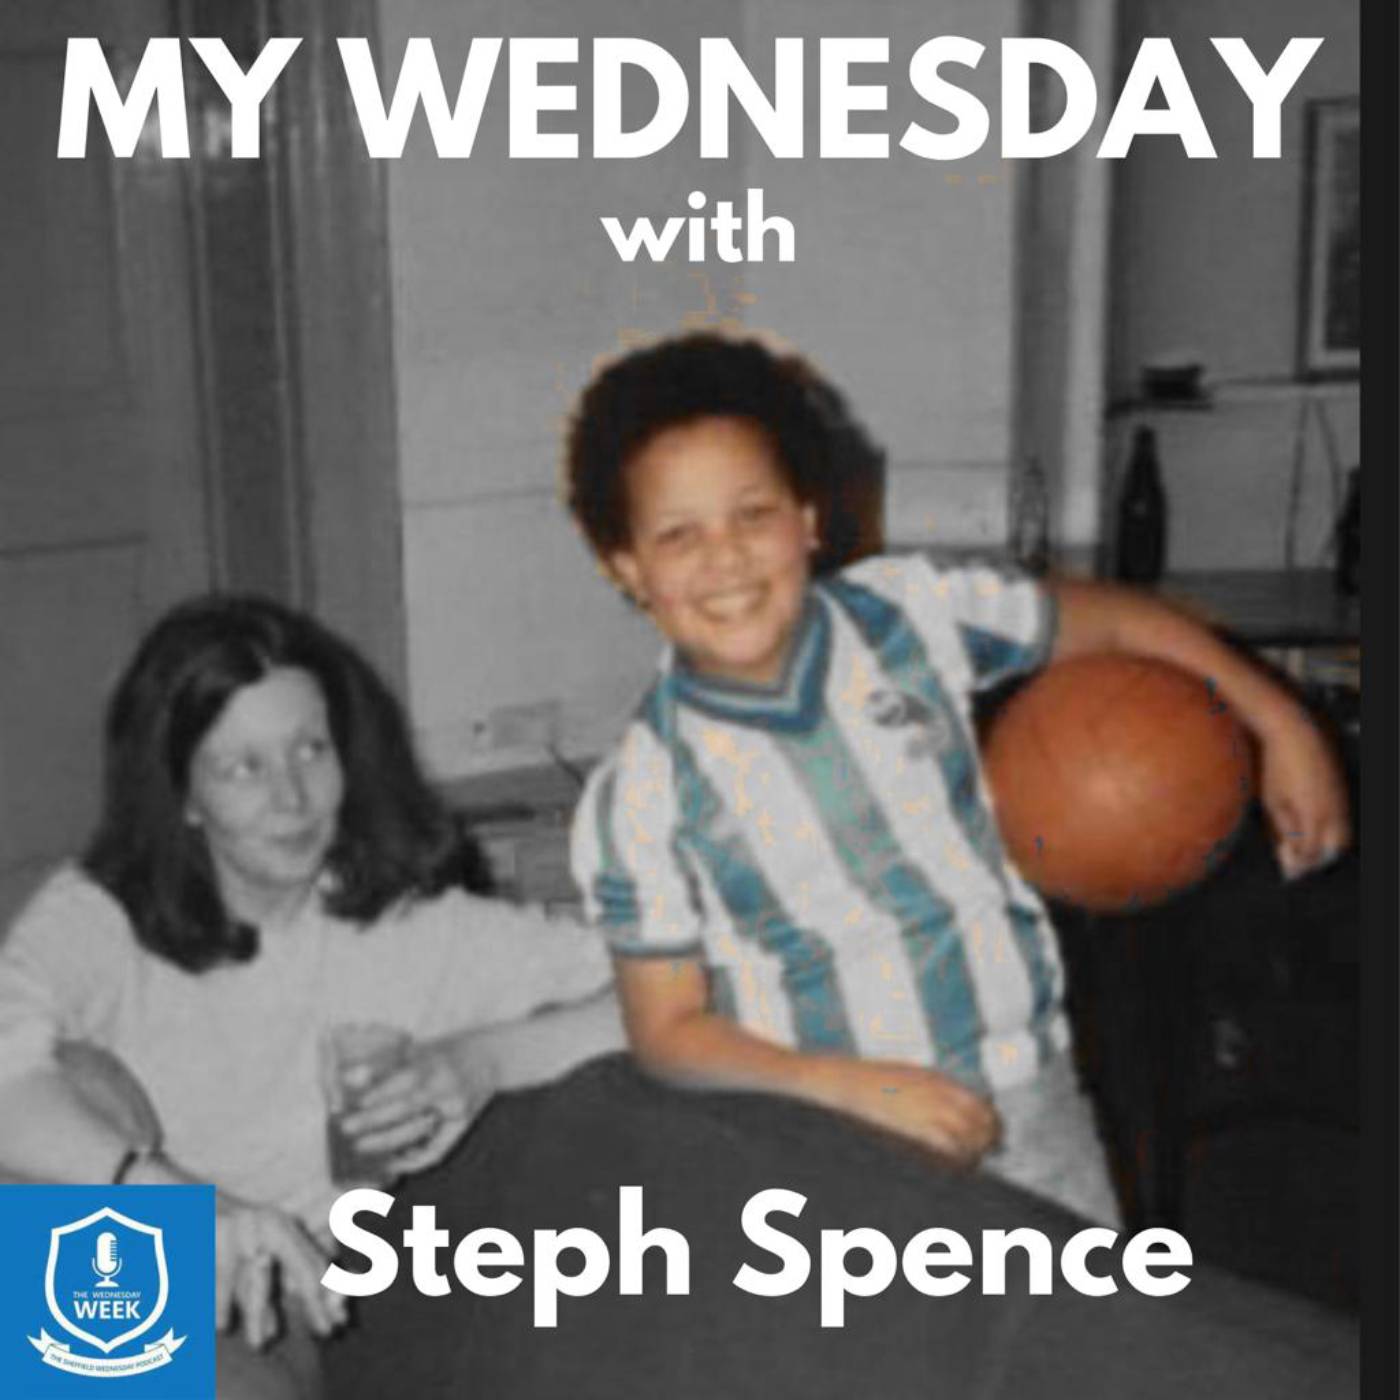 My Wednesday - Steph Spence